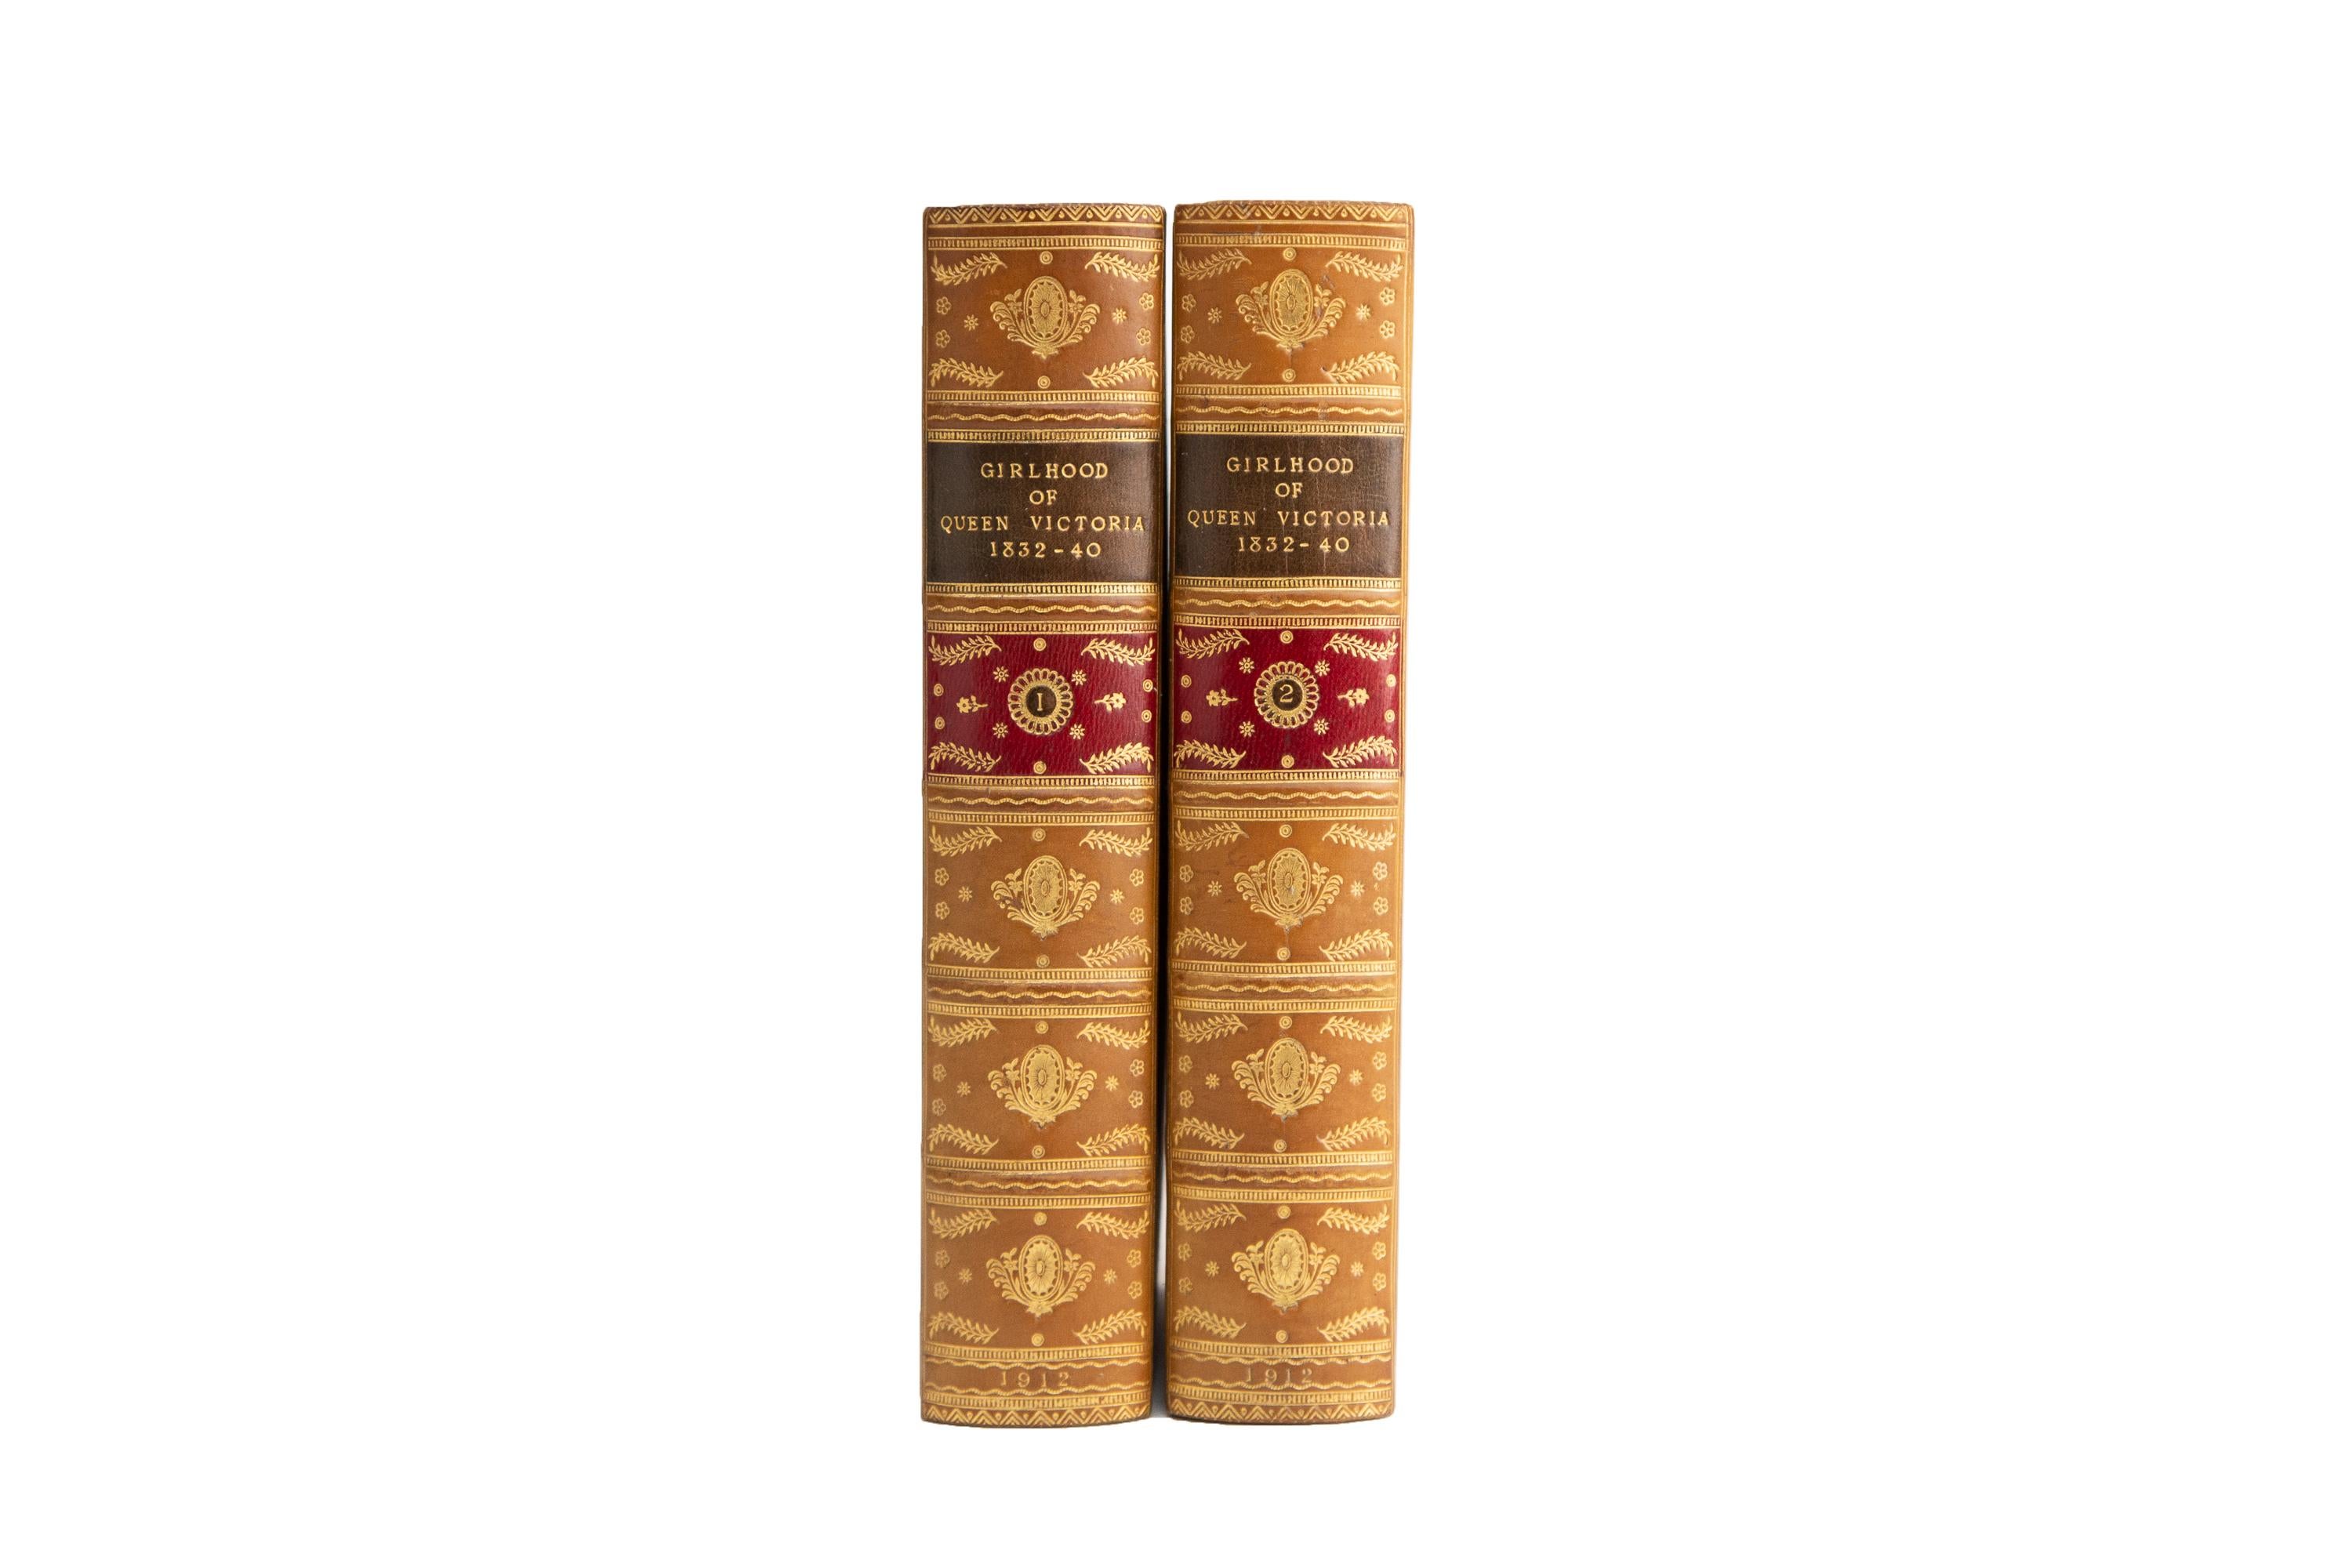 20th Century 2 Volumes. Viscount Esher, G.C.B., G.C.V.O., The Girlhood of Queen Victoria.